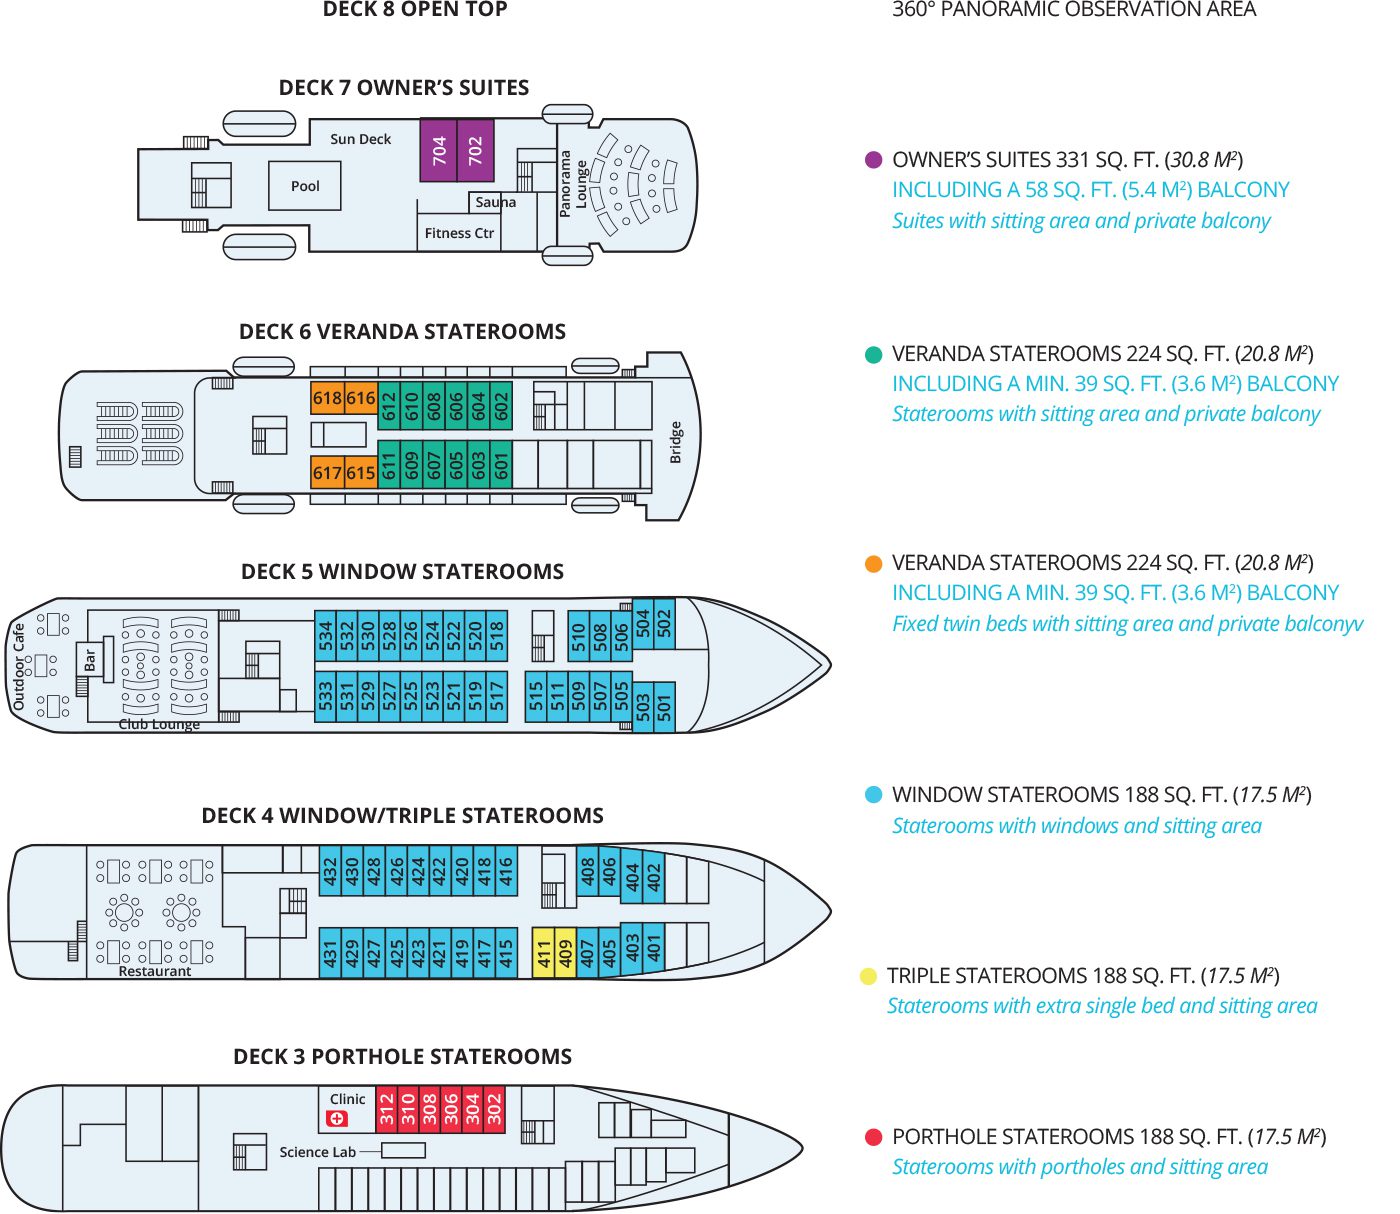 Seaventure Deck Plan